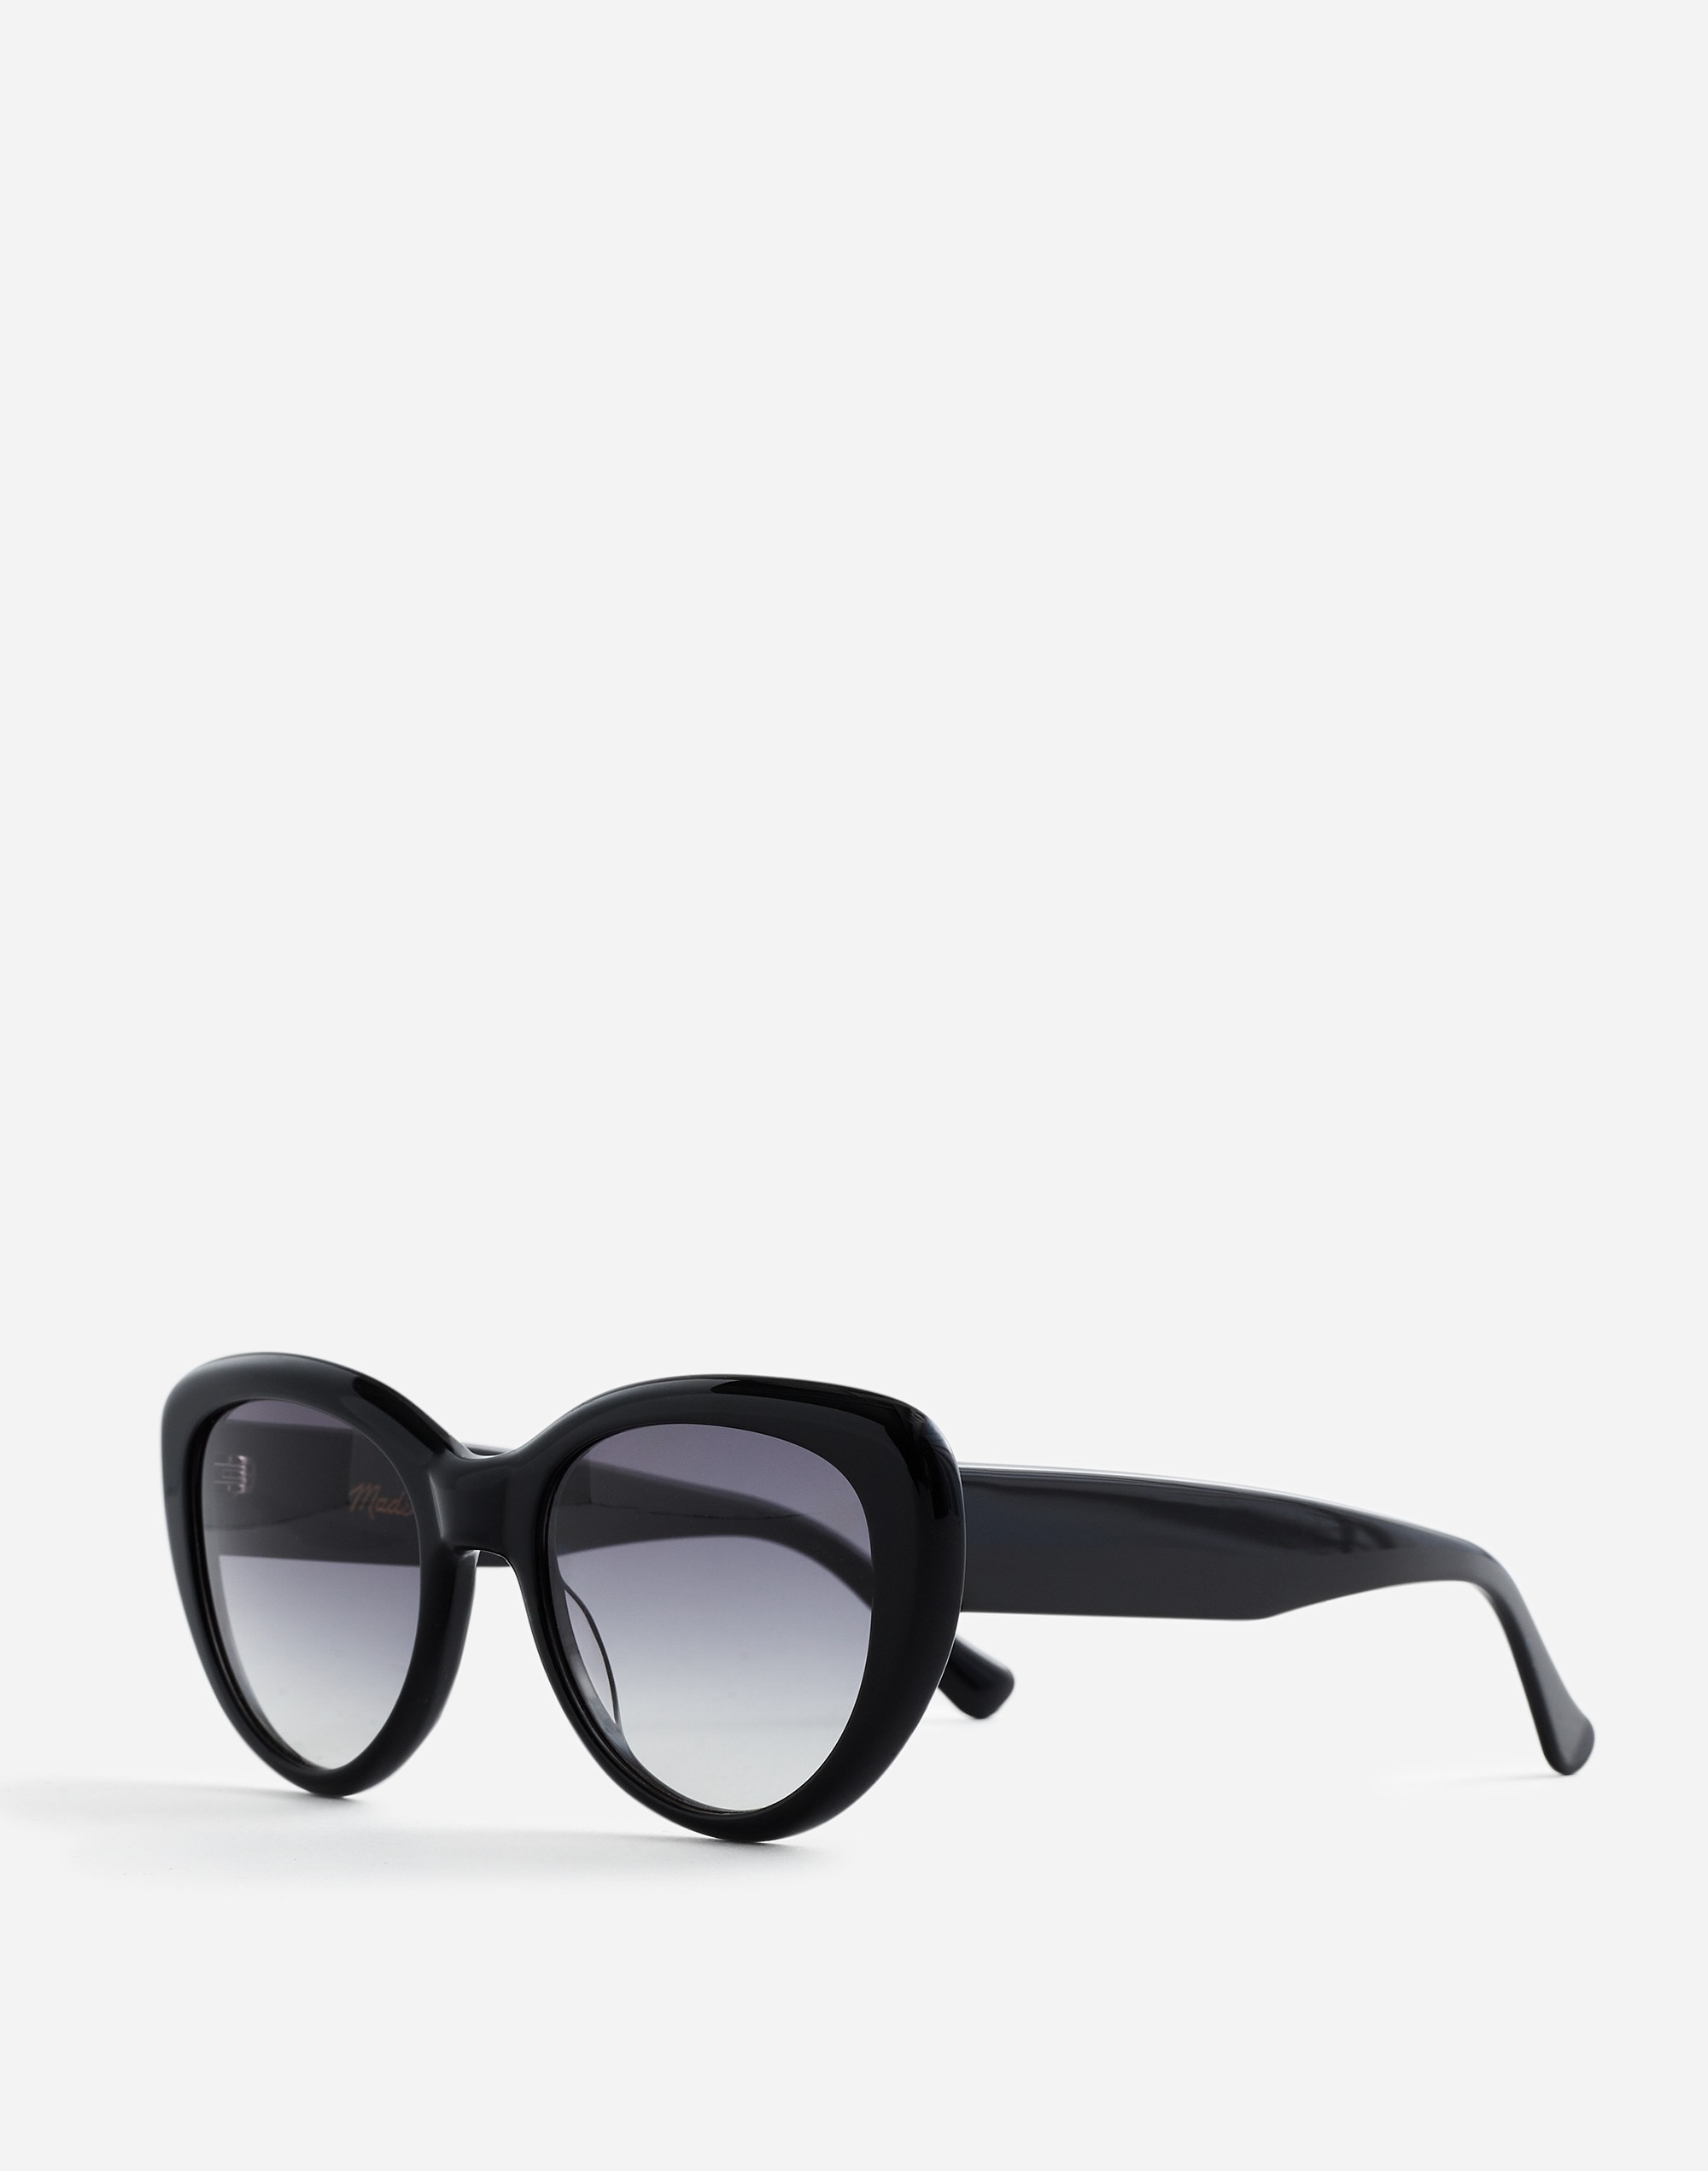 Mw Leanna Sunglasses In Black